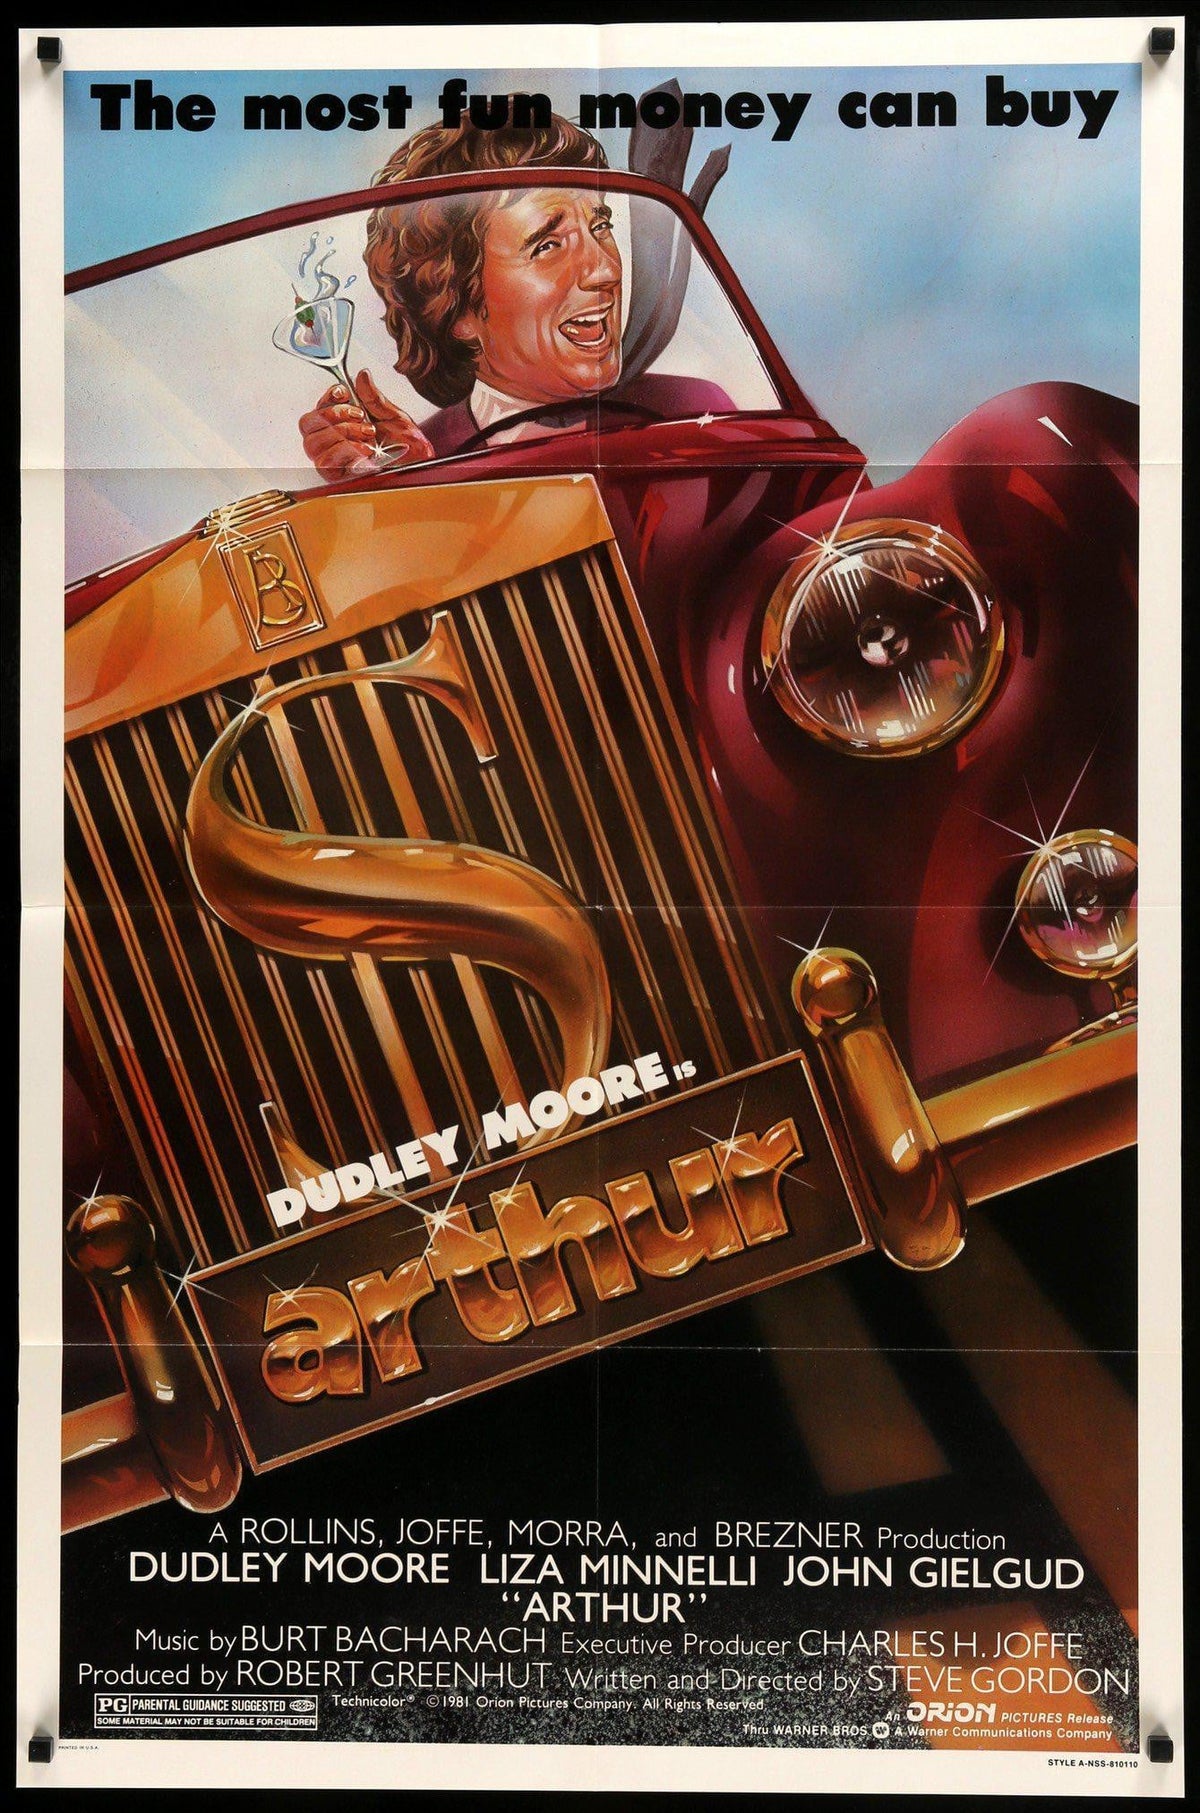 Arthur (1981) original movie poster for sale at Original Film Art